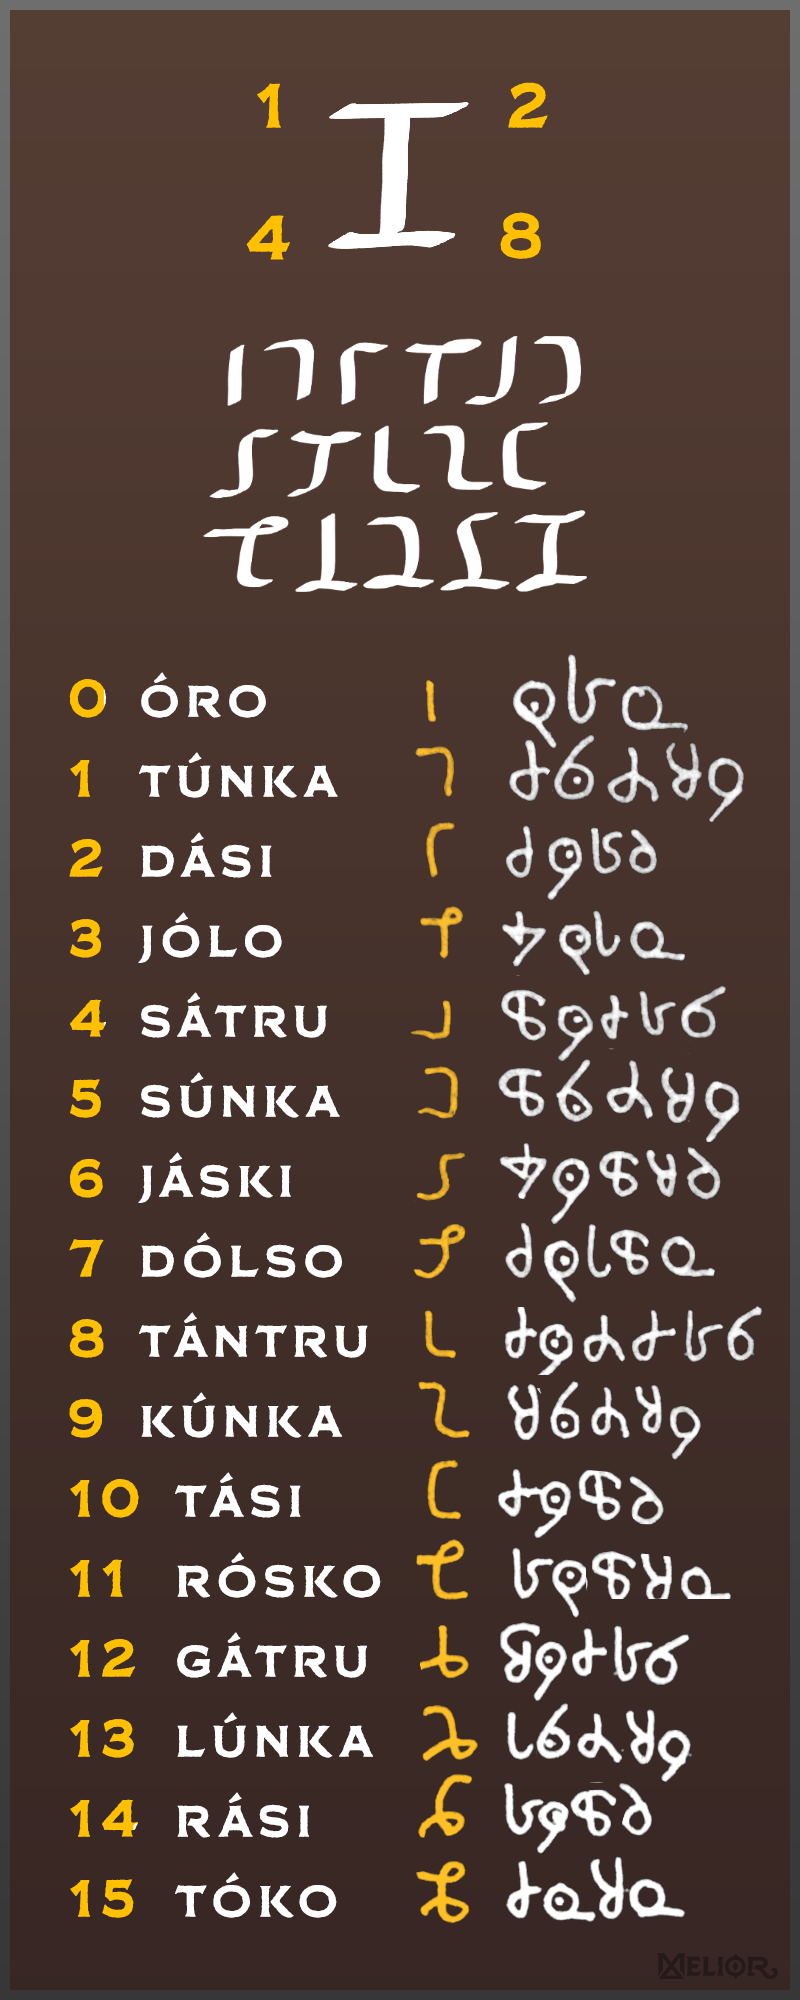 Hexadecimal (base-16) numbers in the Rréraliázi language.